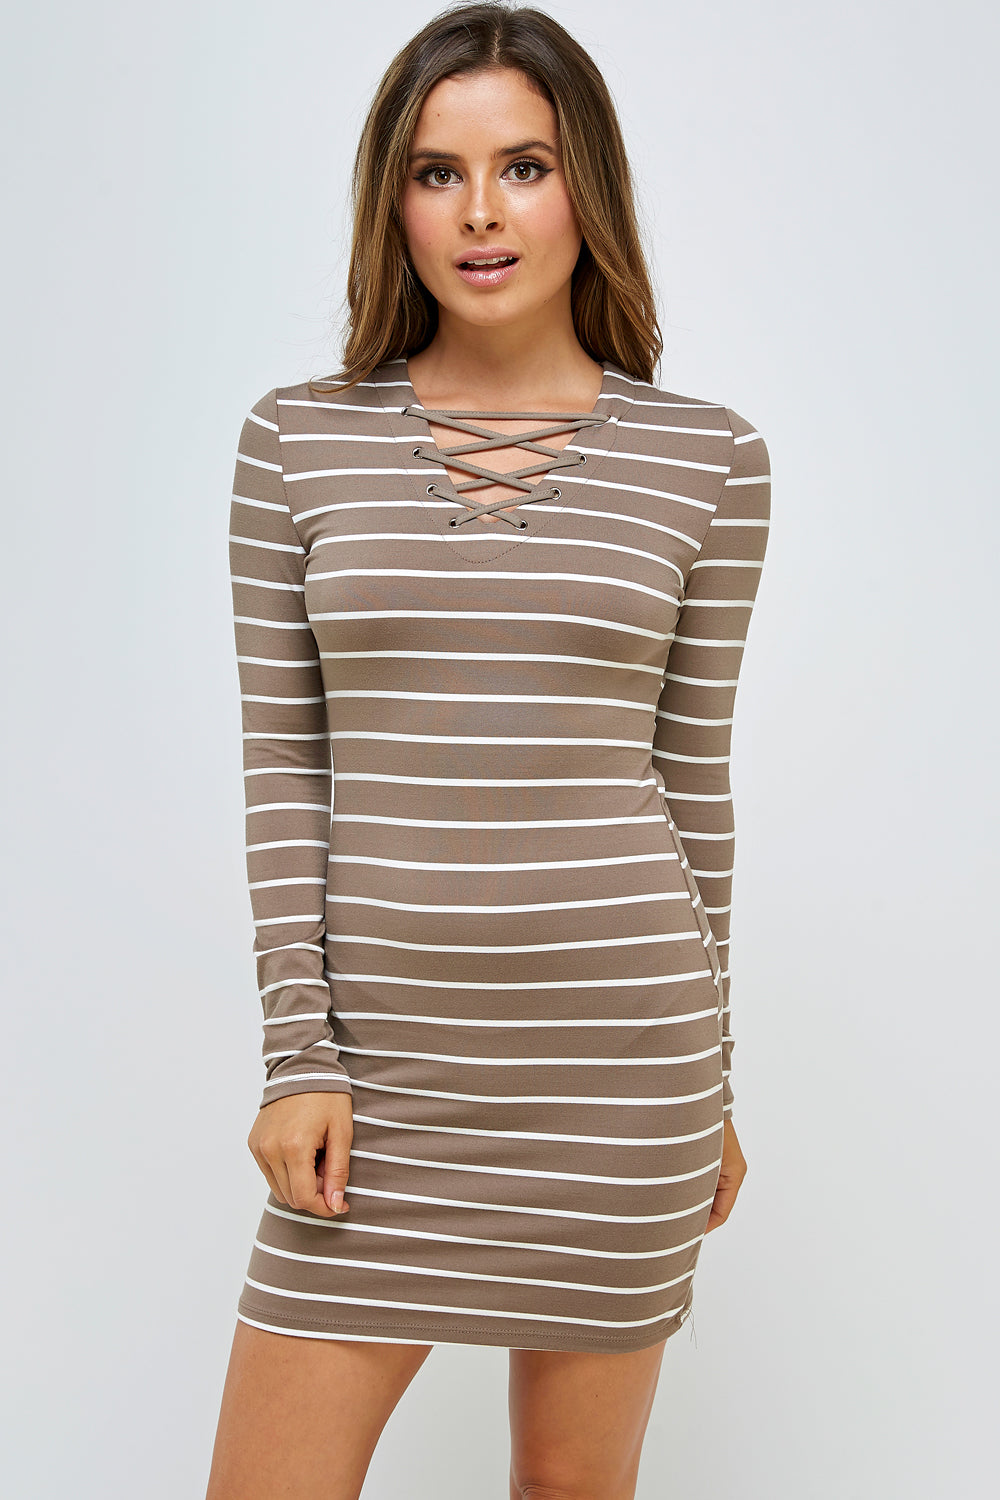 [$3/piece] Striped Lace-up Bodycon Dress